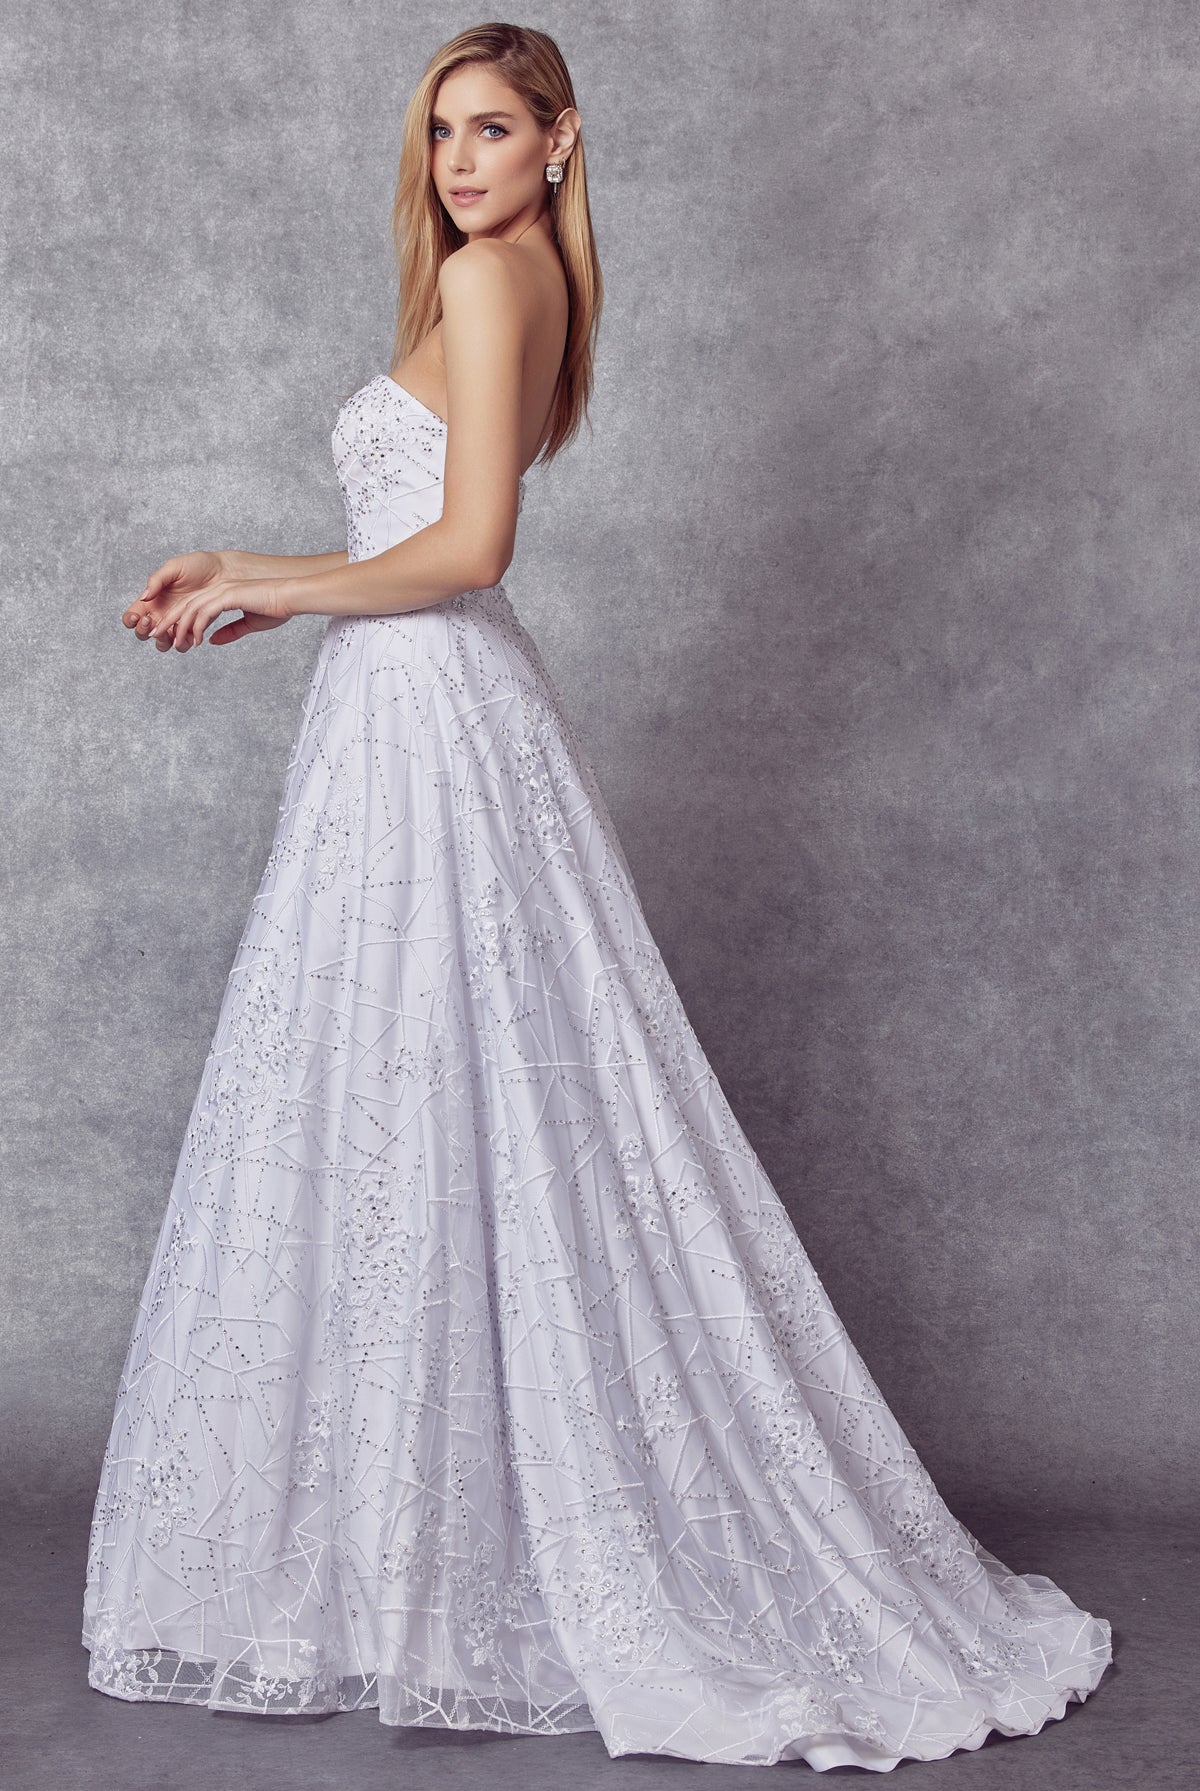 Lace A-Line Wedding Dress, Strapless-smcdress